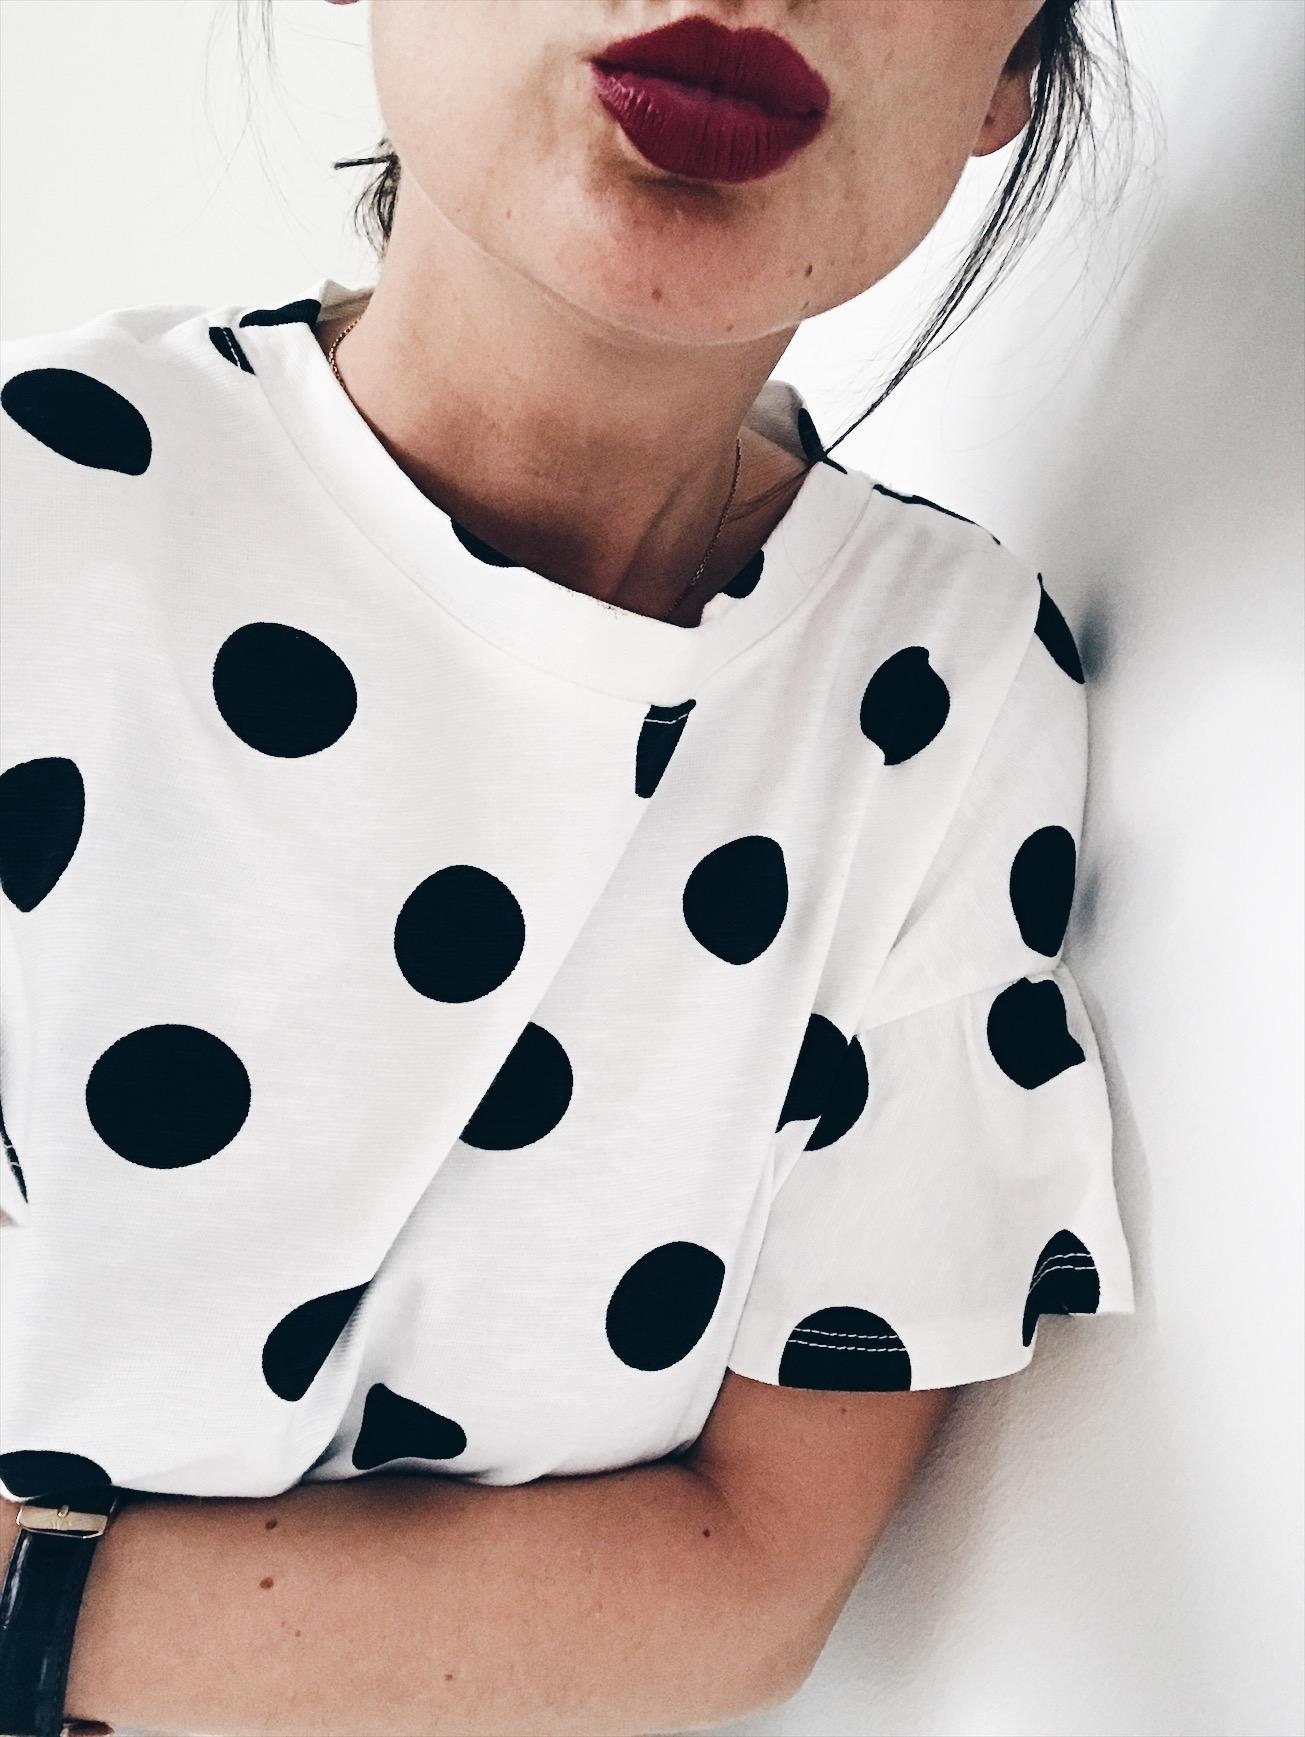 Dotsdotsdots
#Punktliebe #ootd #fashion #whiteshirt #dots #dresscode #outfit #Lippenstift #kleid #mac 